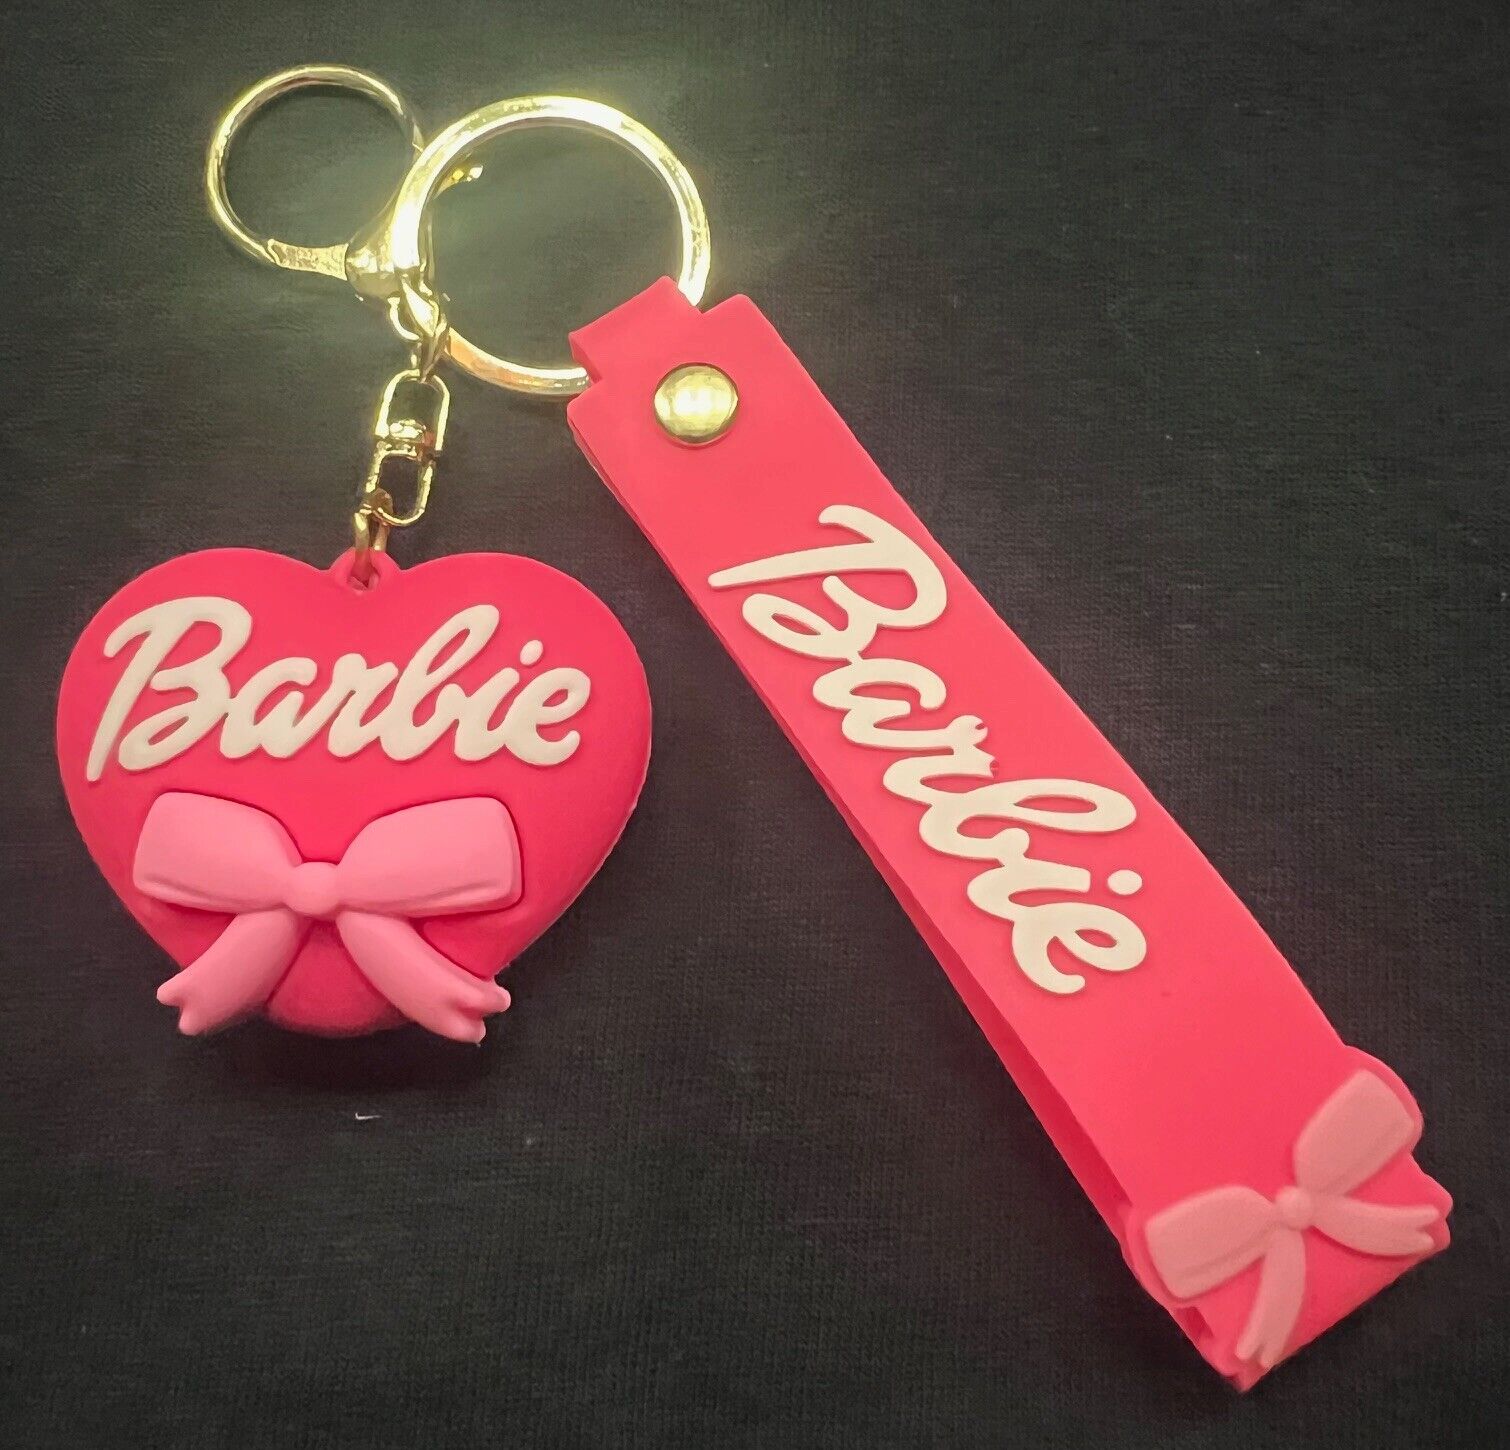 New Great Quality Barbie Heart PVC Keychain. Under $10 bucks Great Value